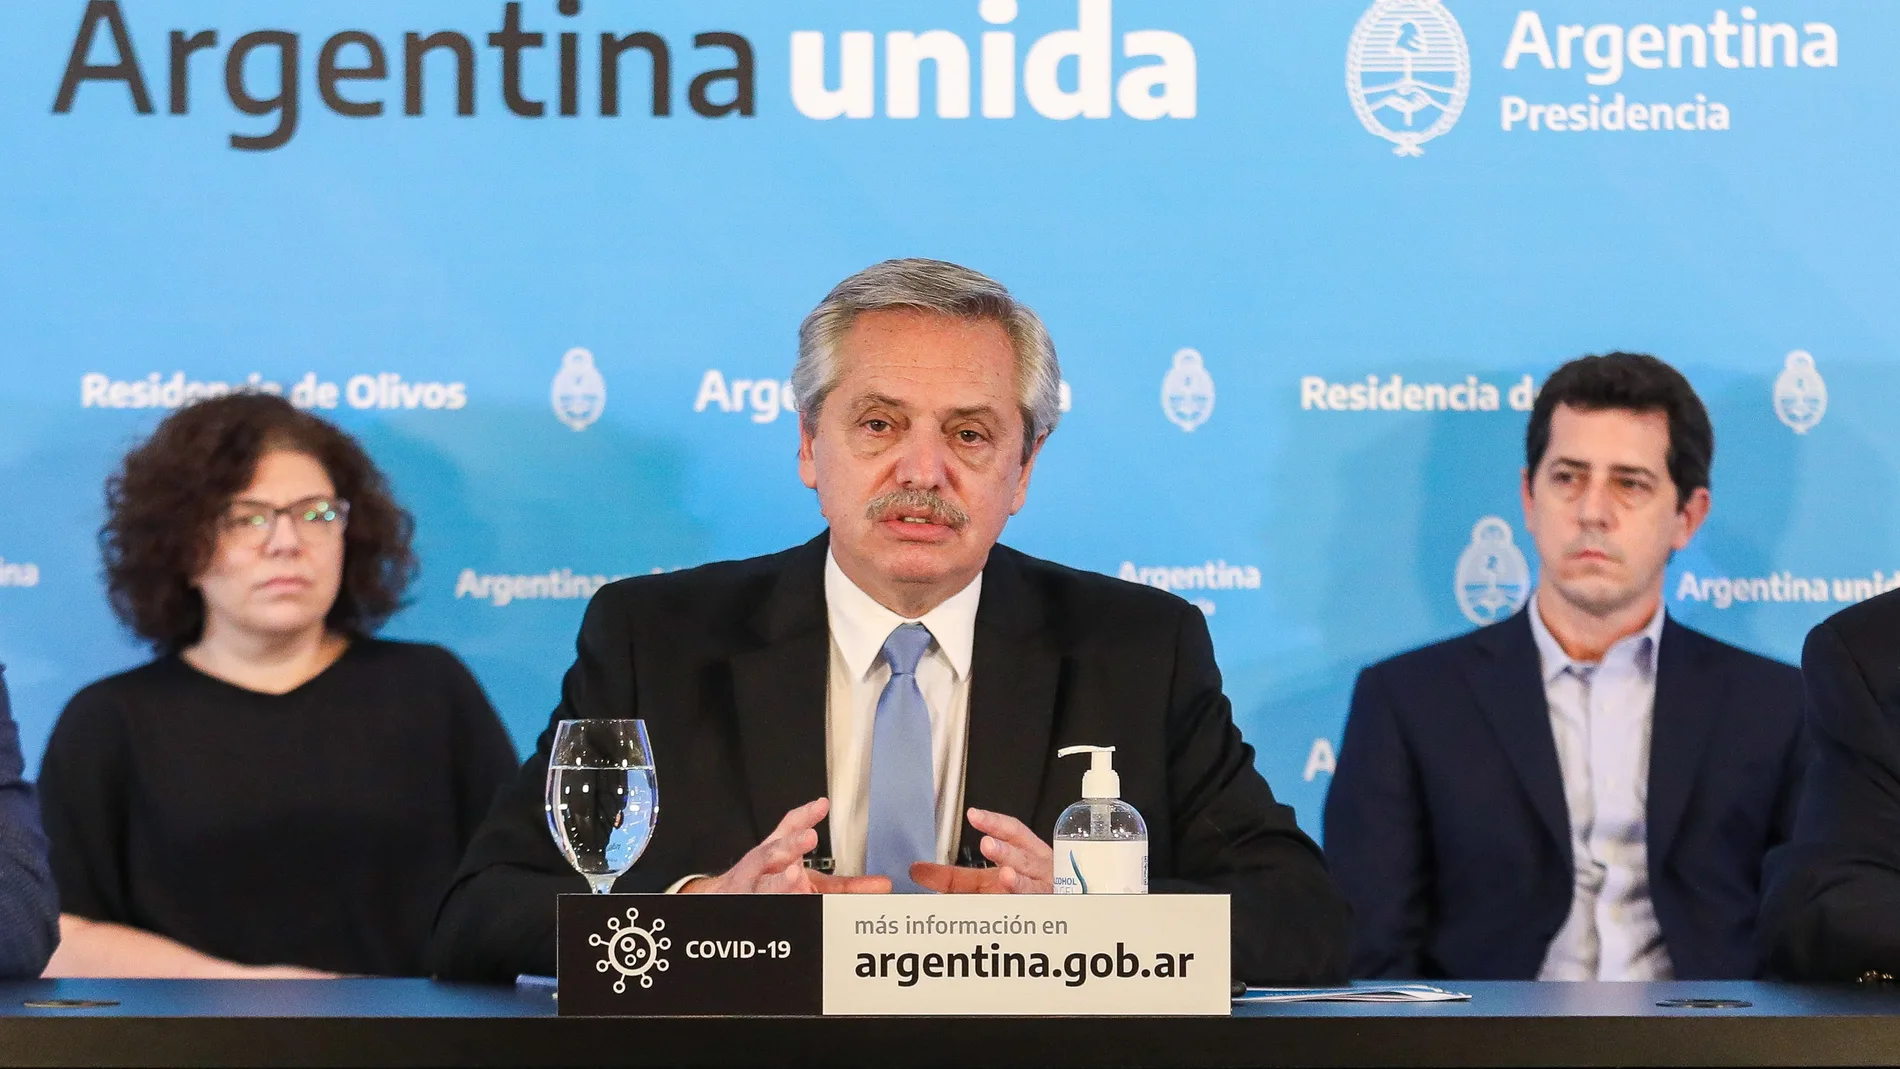 Argentina extends quarantine until 10 May